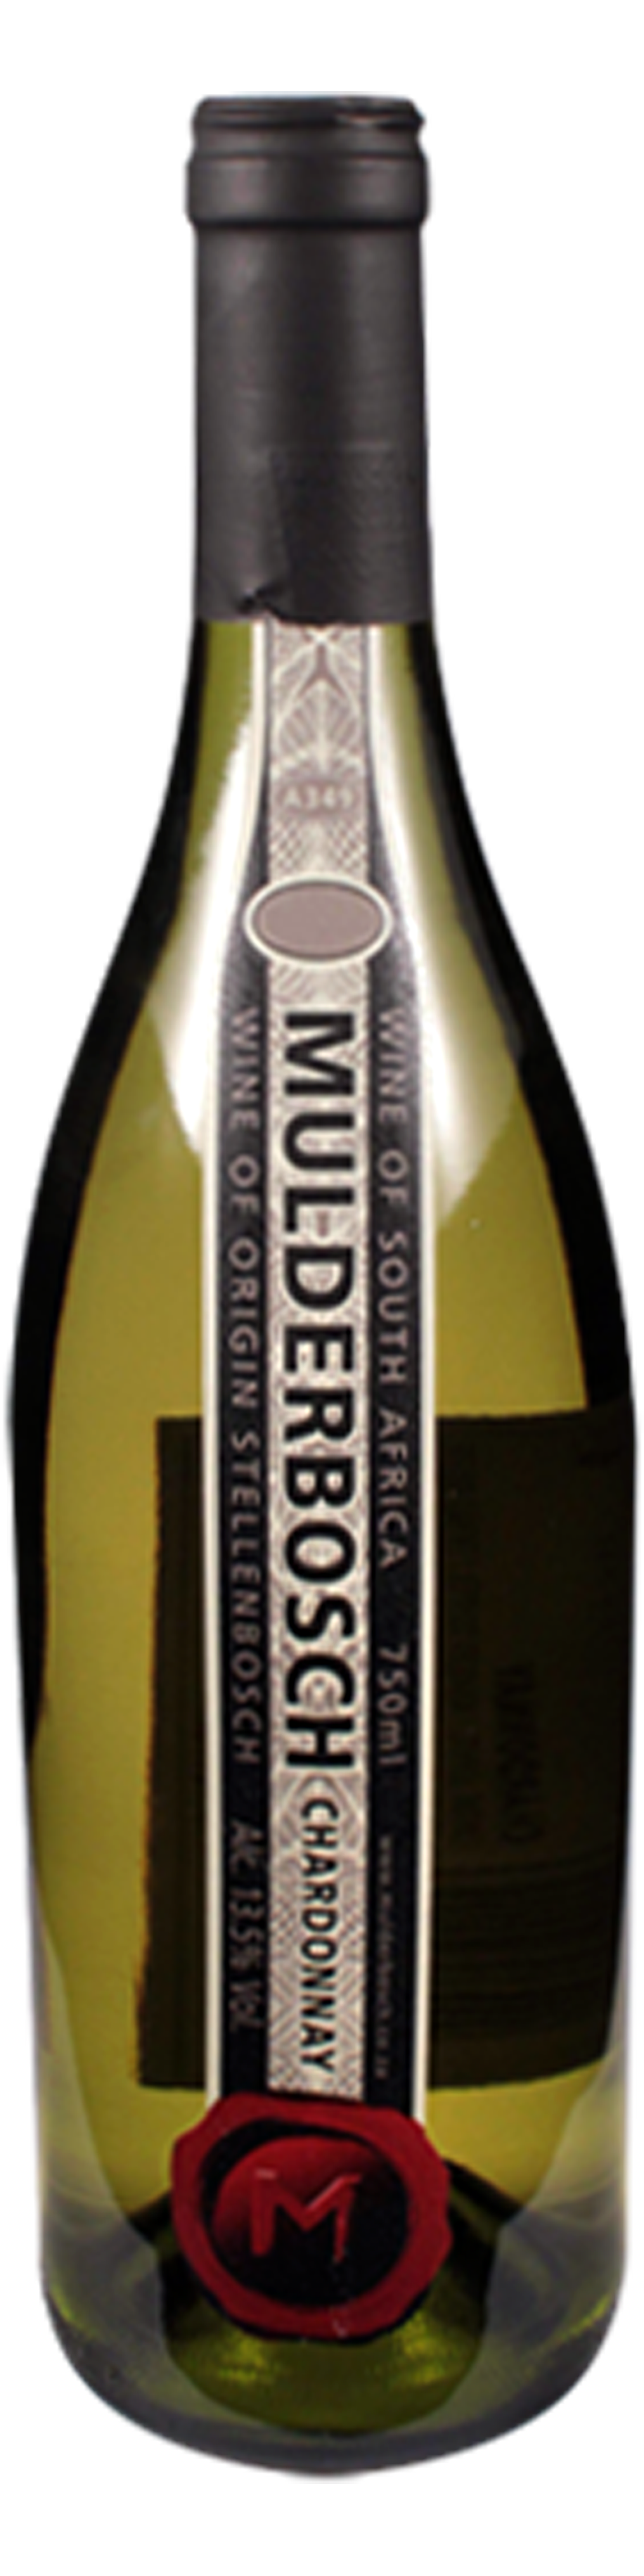 Bottle shot of 2012 Chardonnay